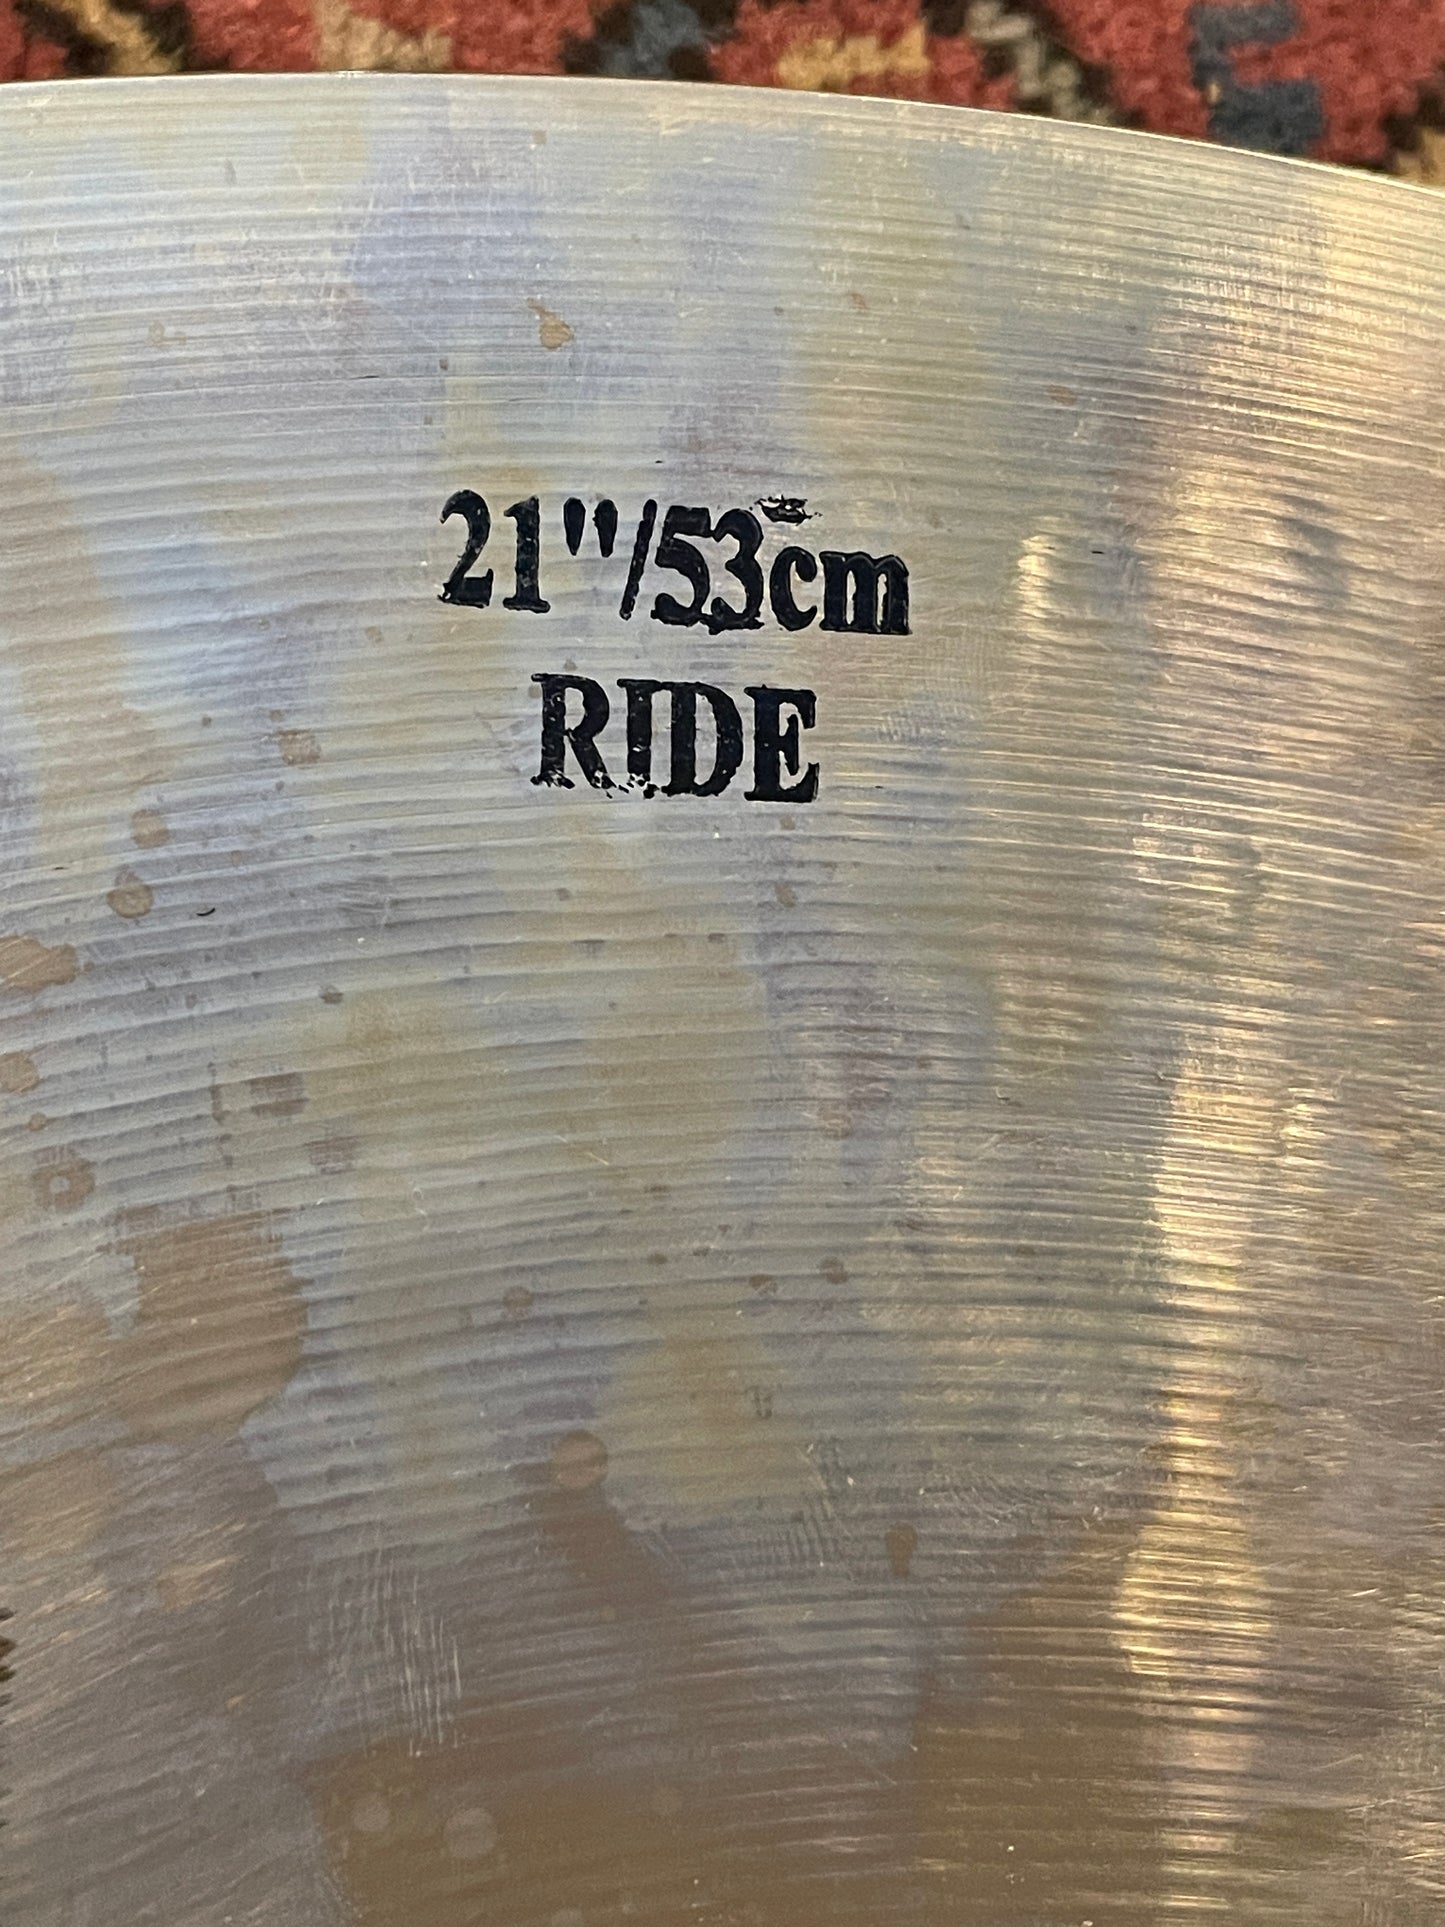 21" Zultan Q Series Ride Cymbal 2992g